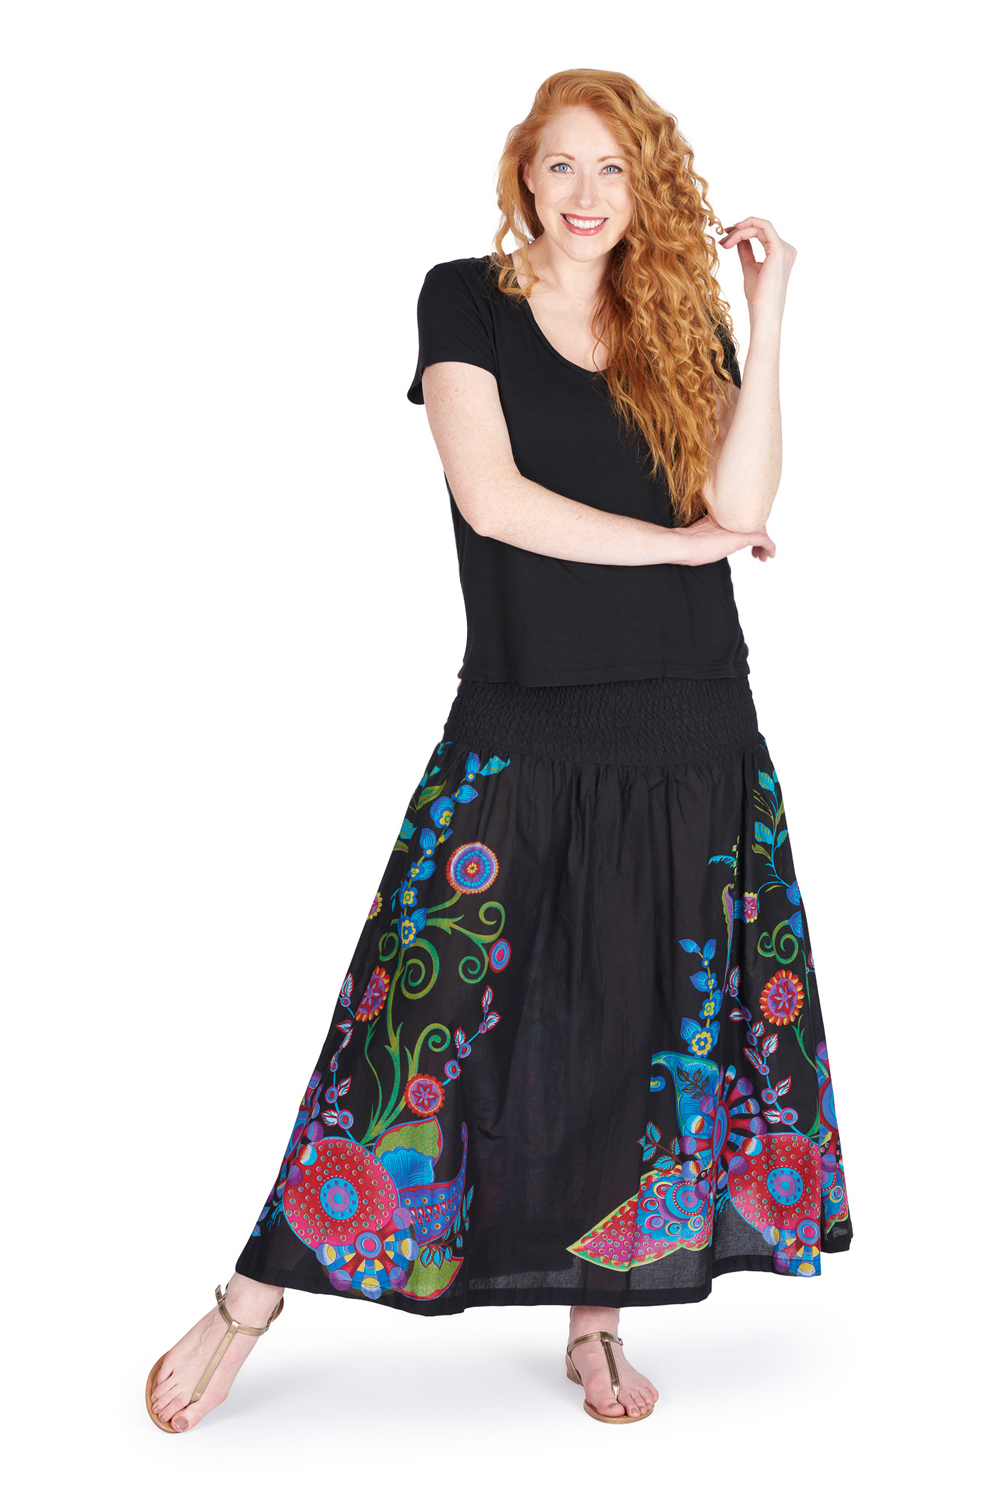 Rainbow flower black skirt with pocket